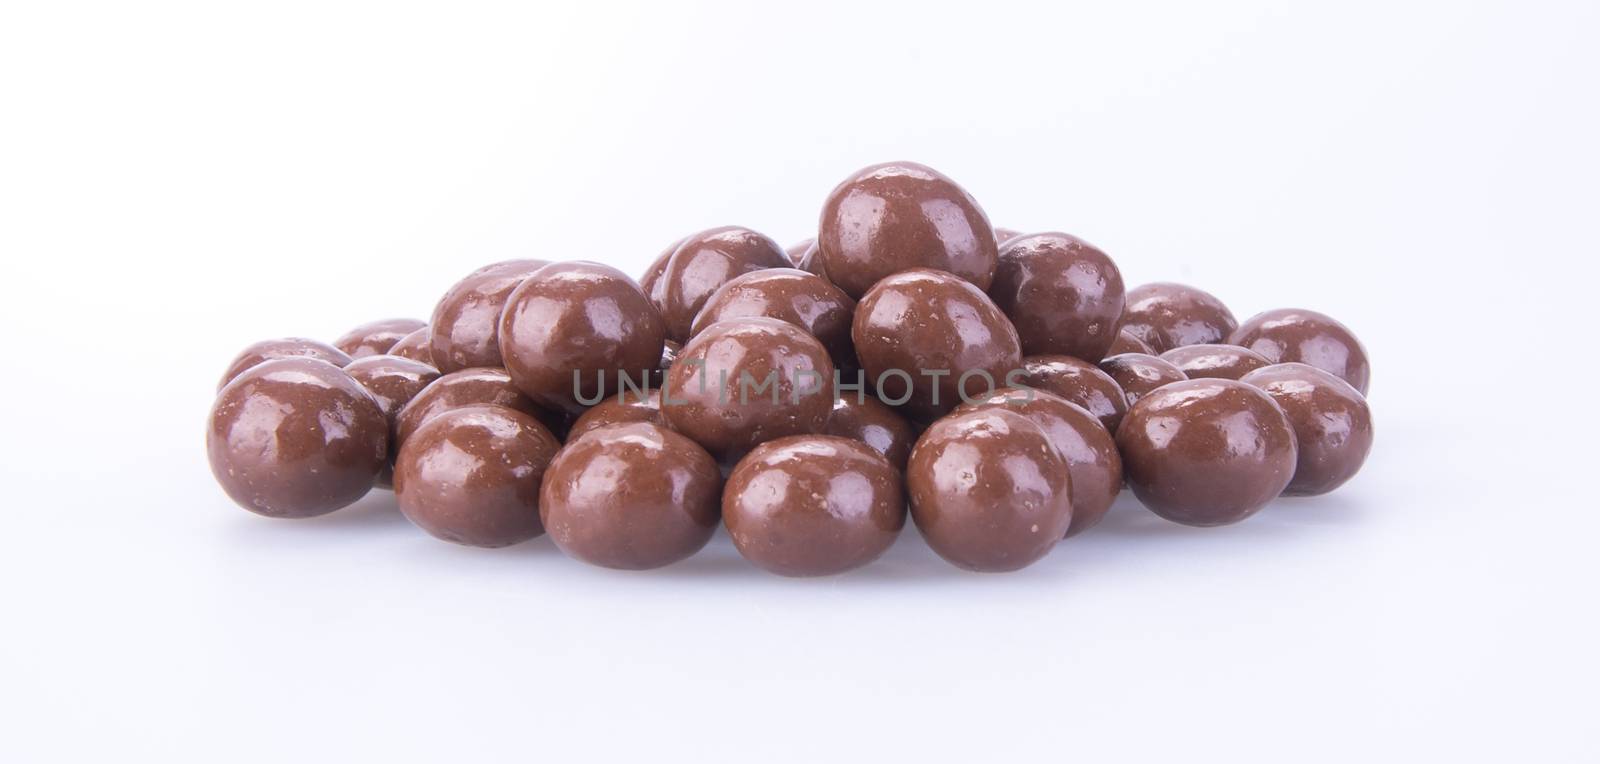 chocolate balls. chocolate balls on a background.